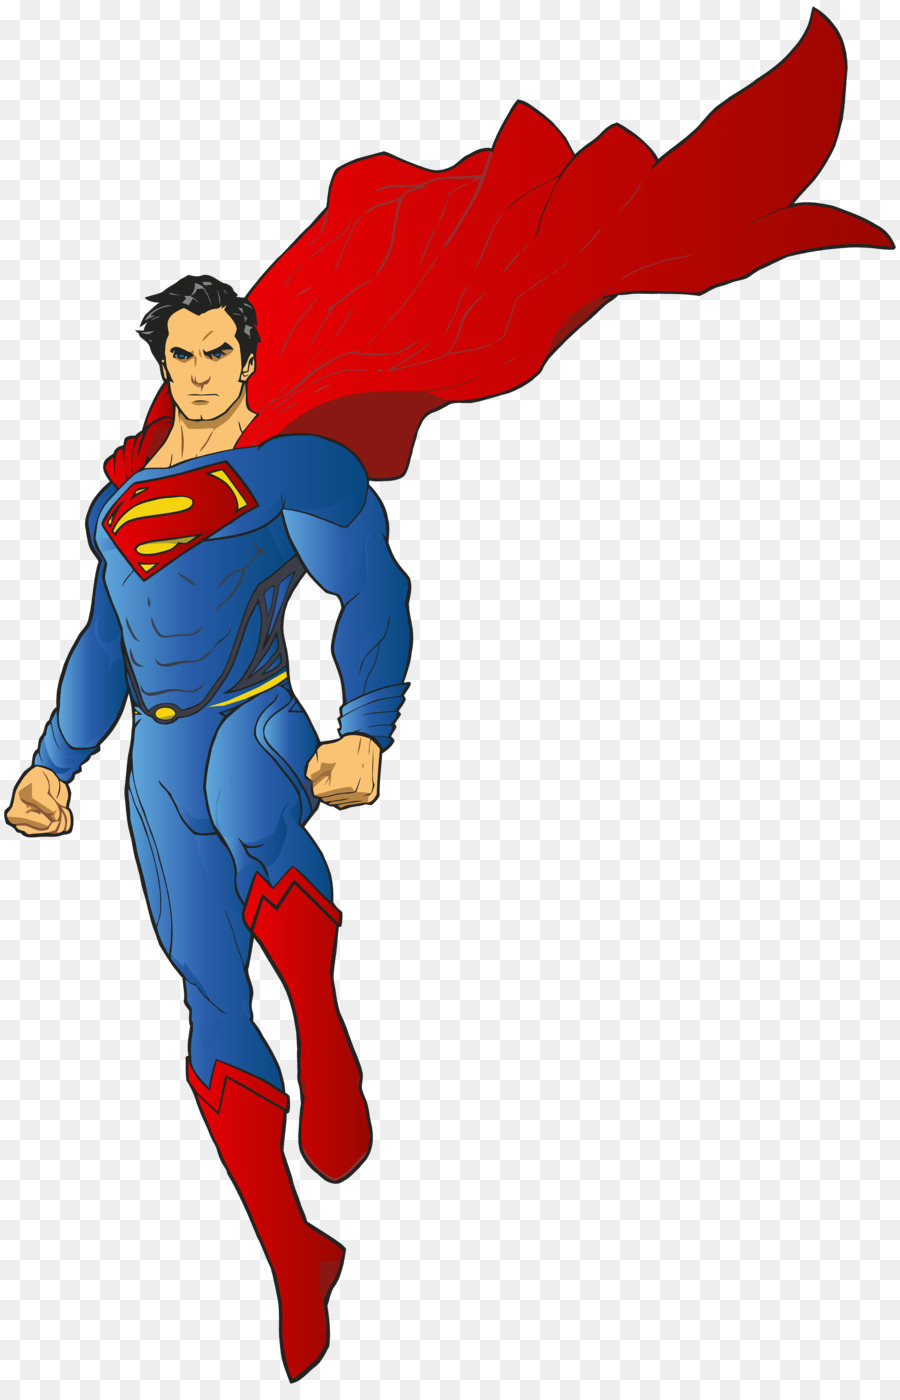 Superman Batman Spider-Man Flash Superhero - super hero logo png download - 5178*8000 - Free Transparent Superman png Download.